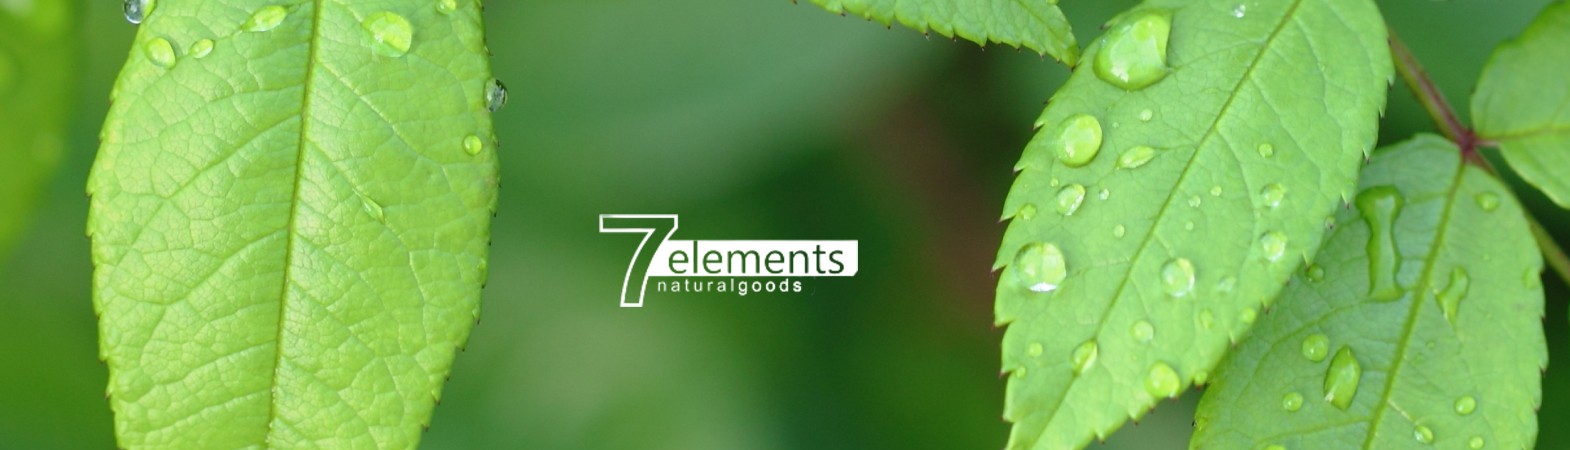 Elements 7 - AROMATHERAPY